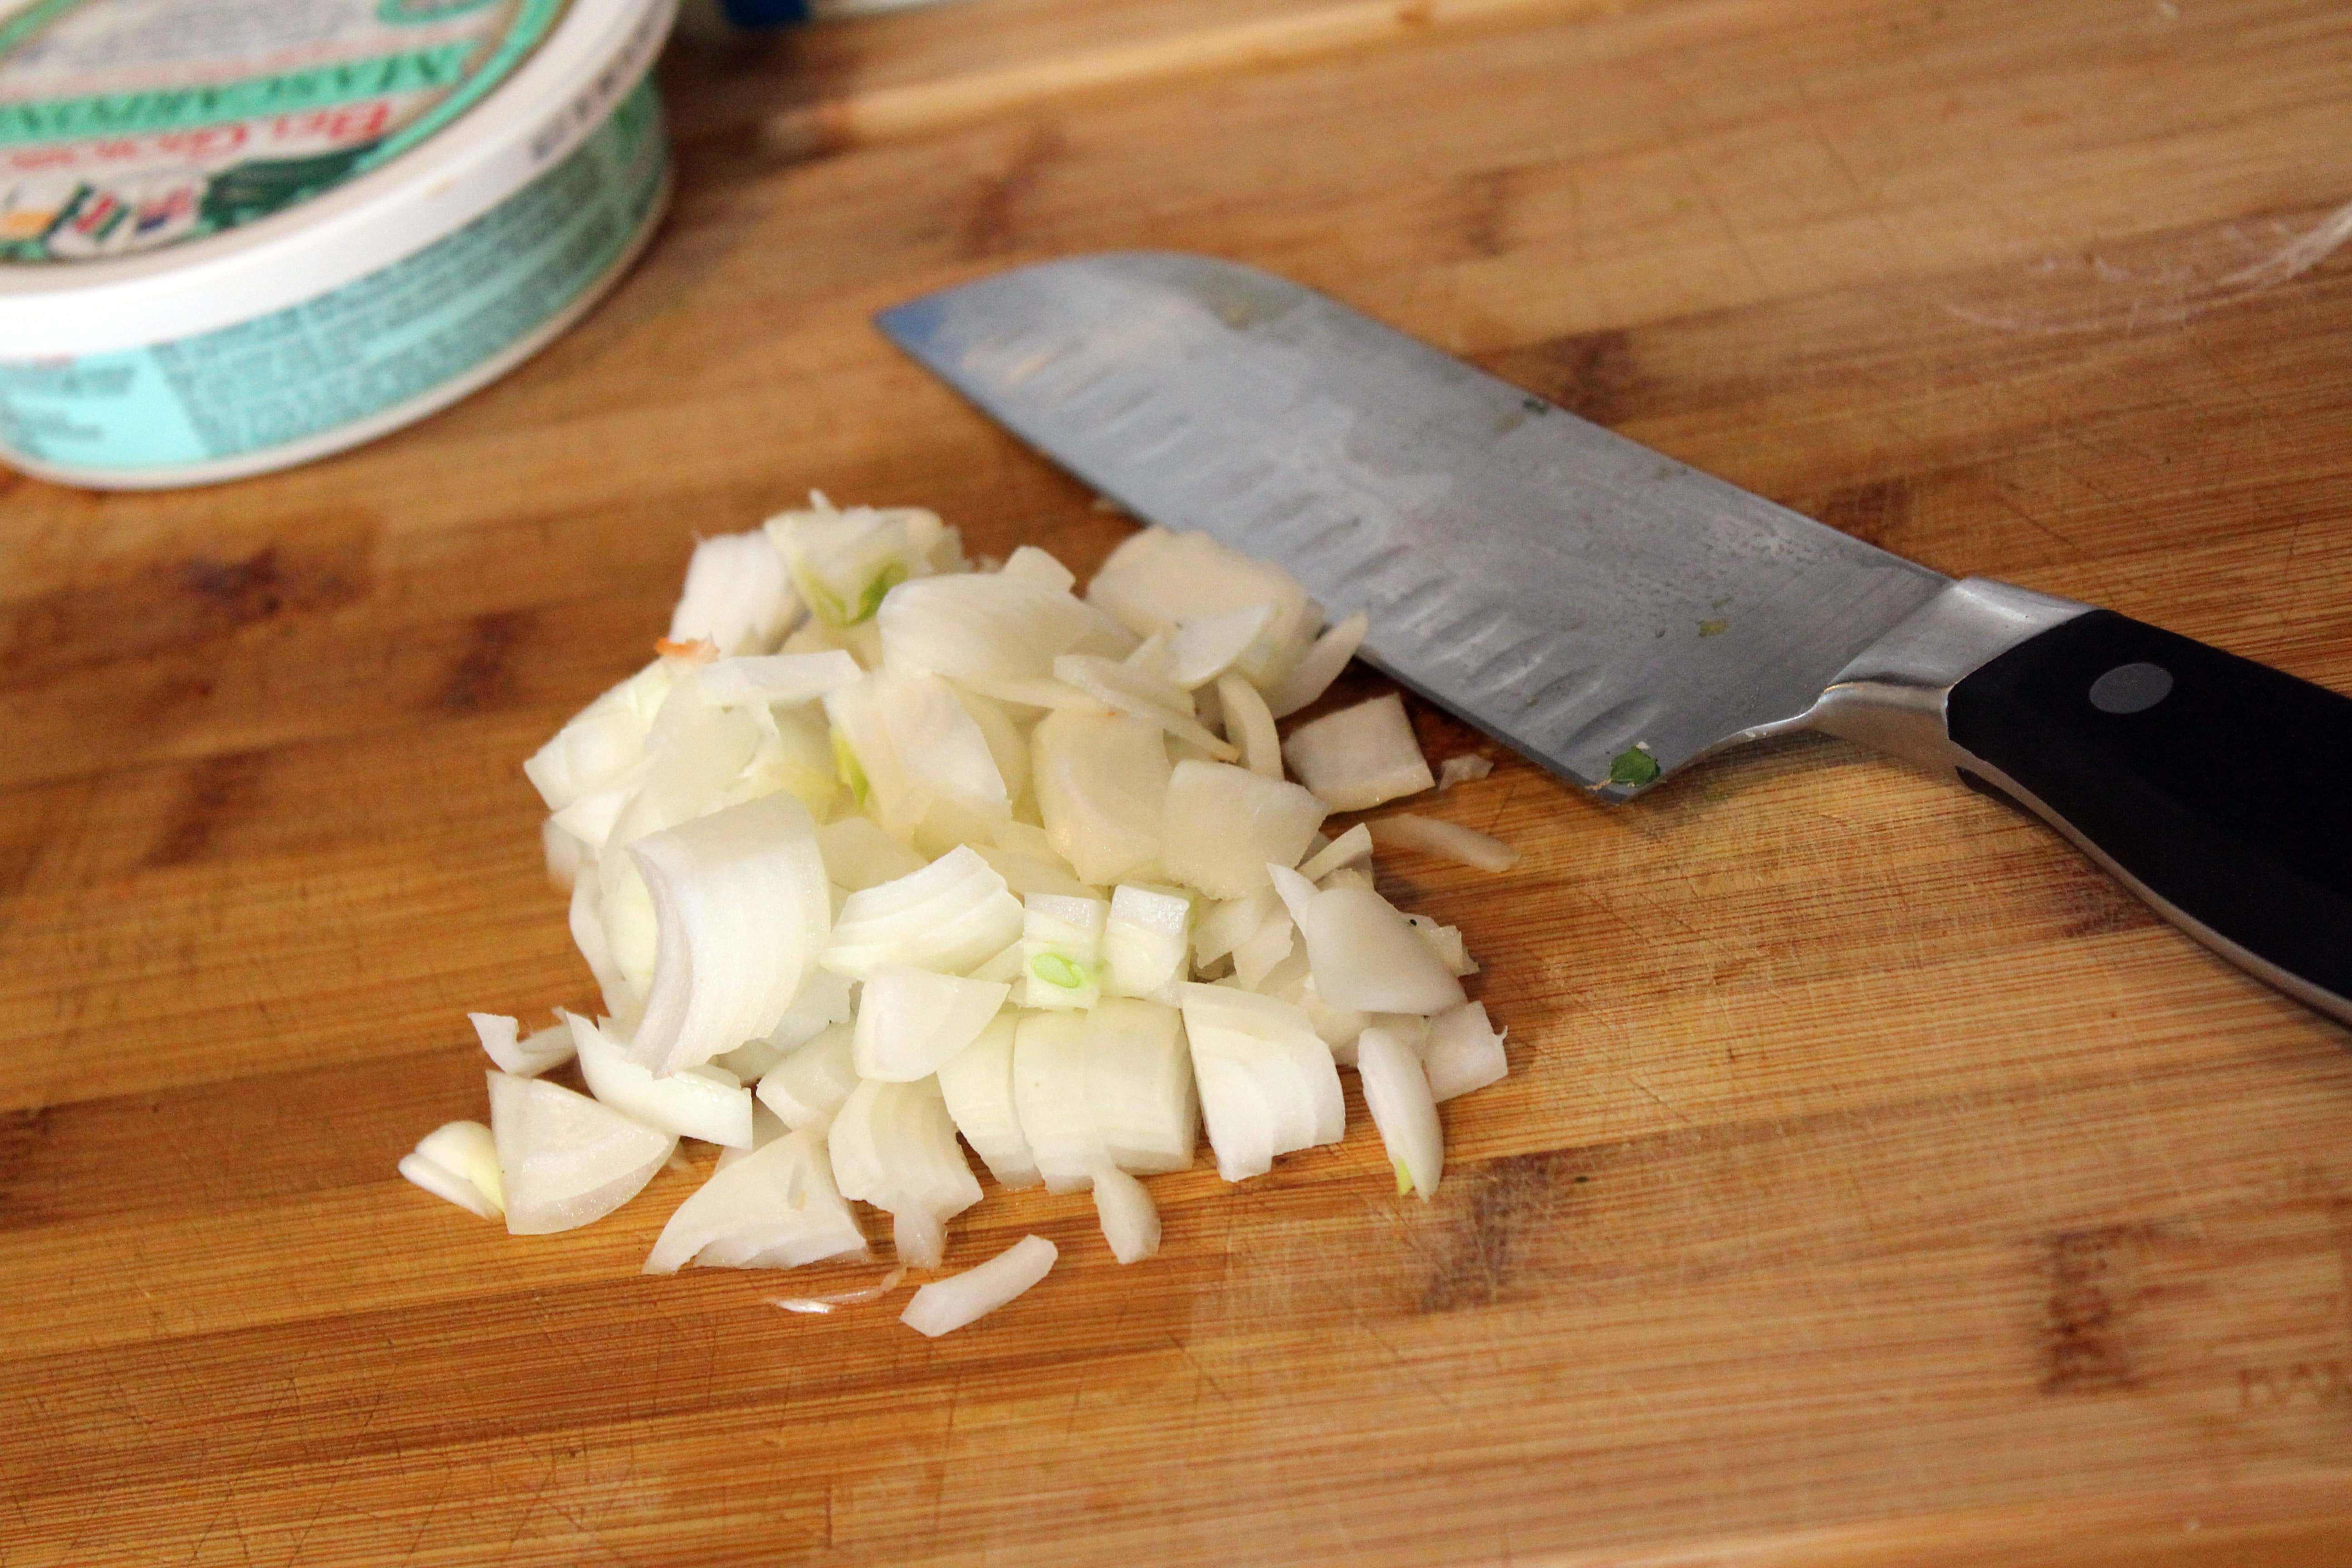 Chop up onion